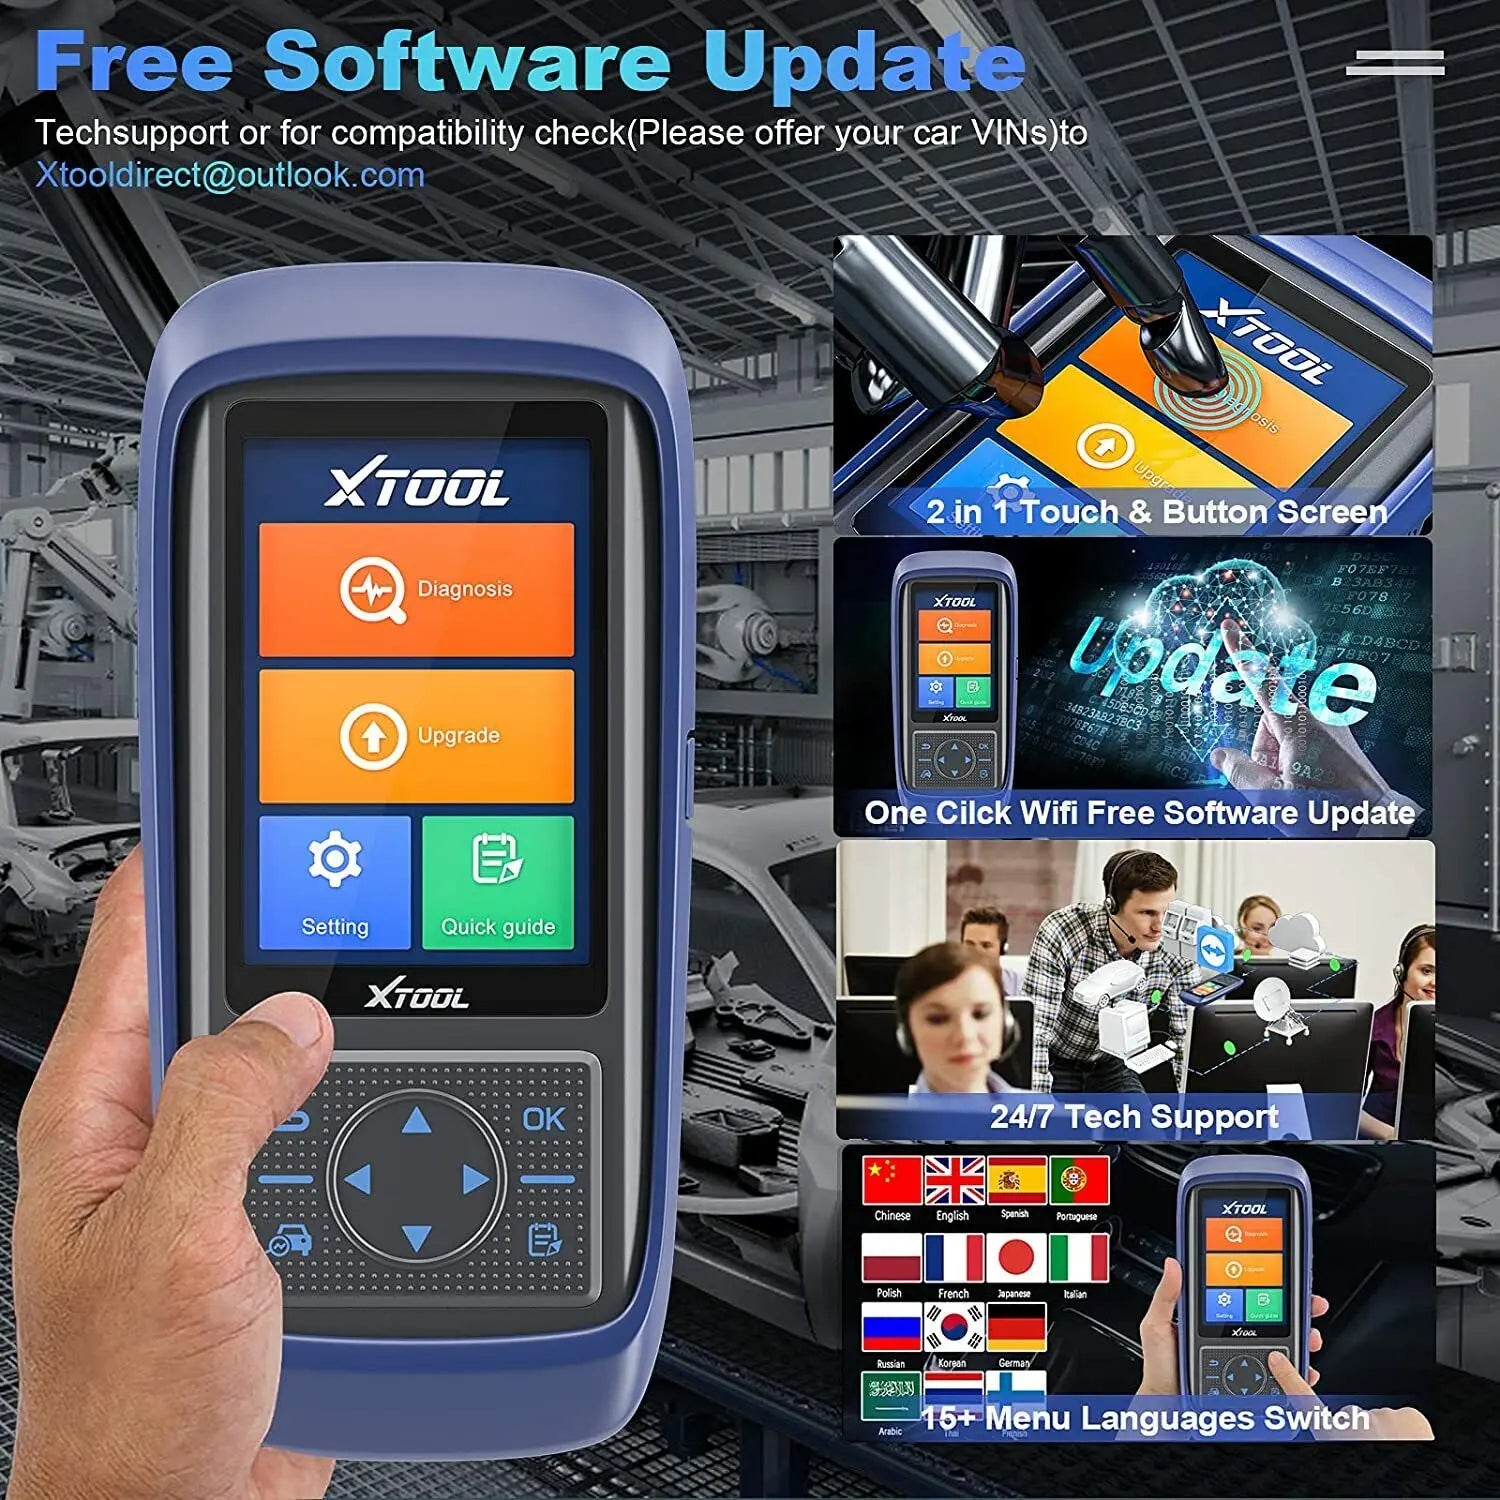 XTOOL A30pro Car Diagnostic Tools Bluetooth Car Automotive OBD2 Key Programmer Scanner Free Update Online - Dynamex